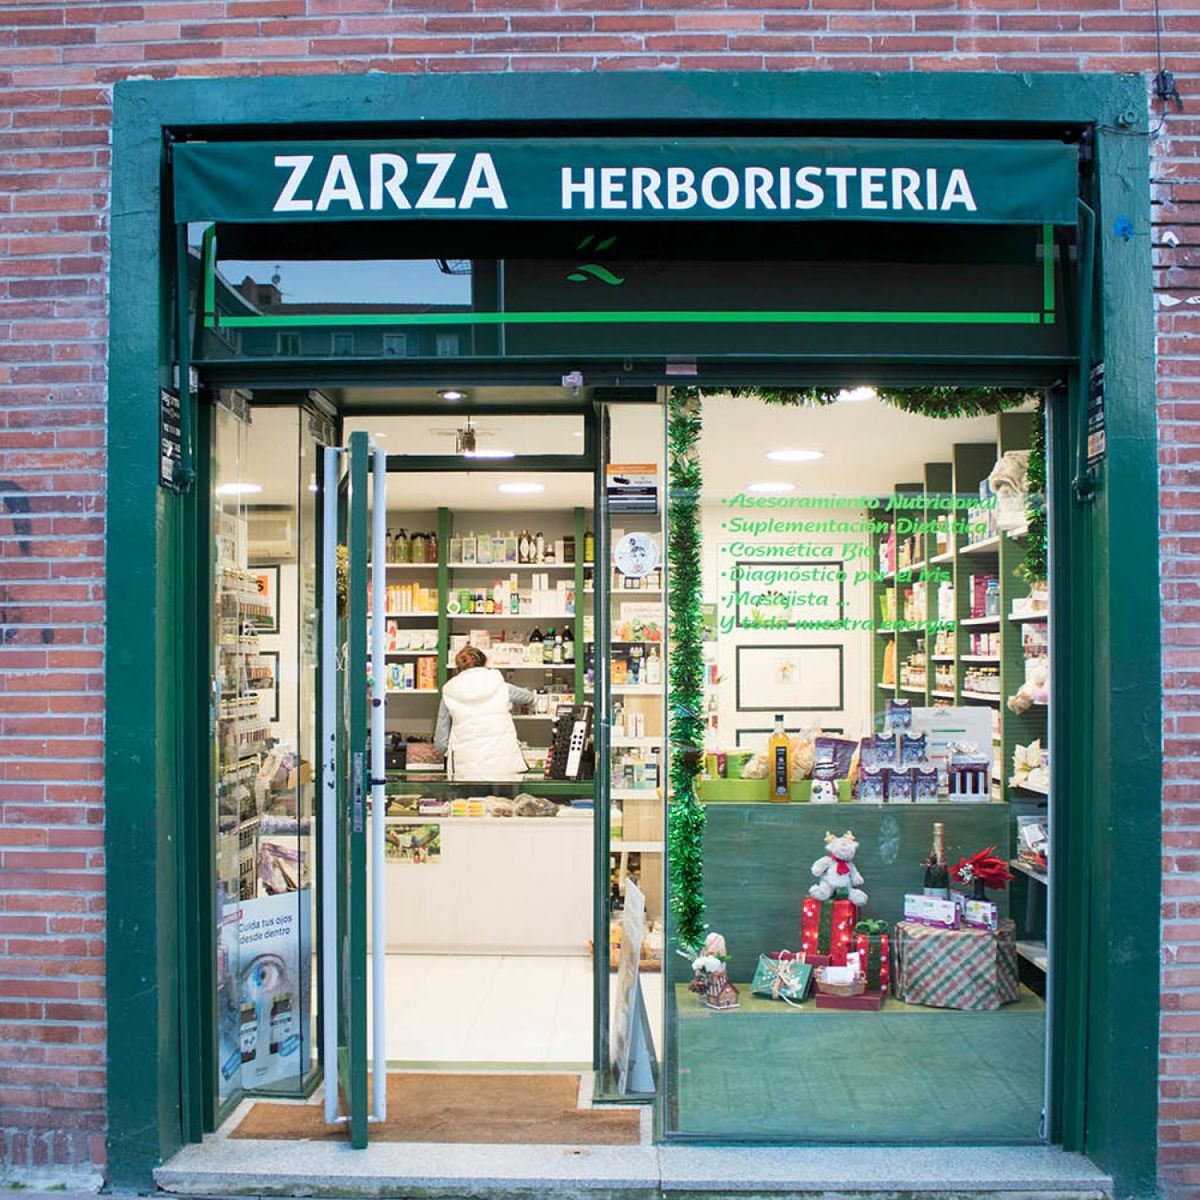 Herboristeria Zarza en Bilbao